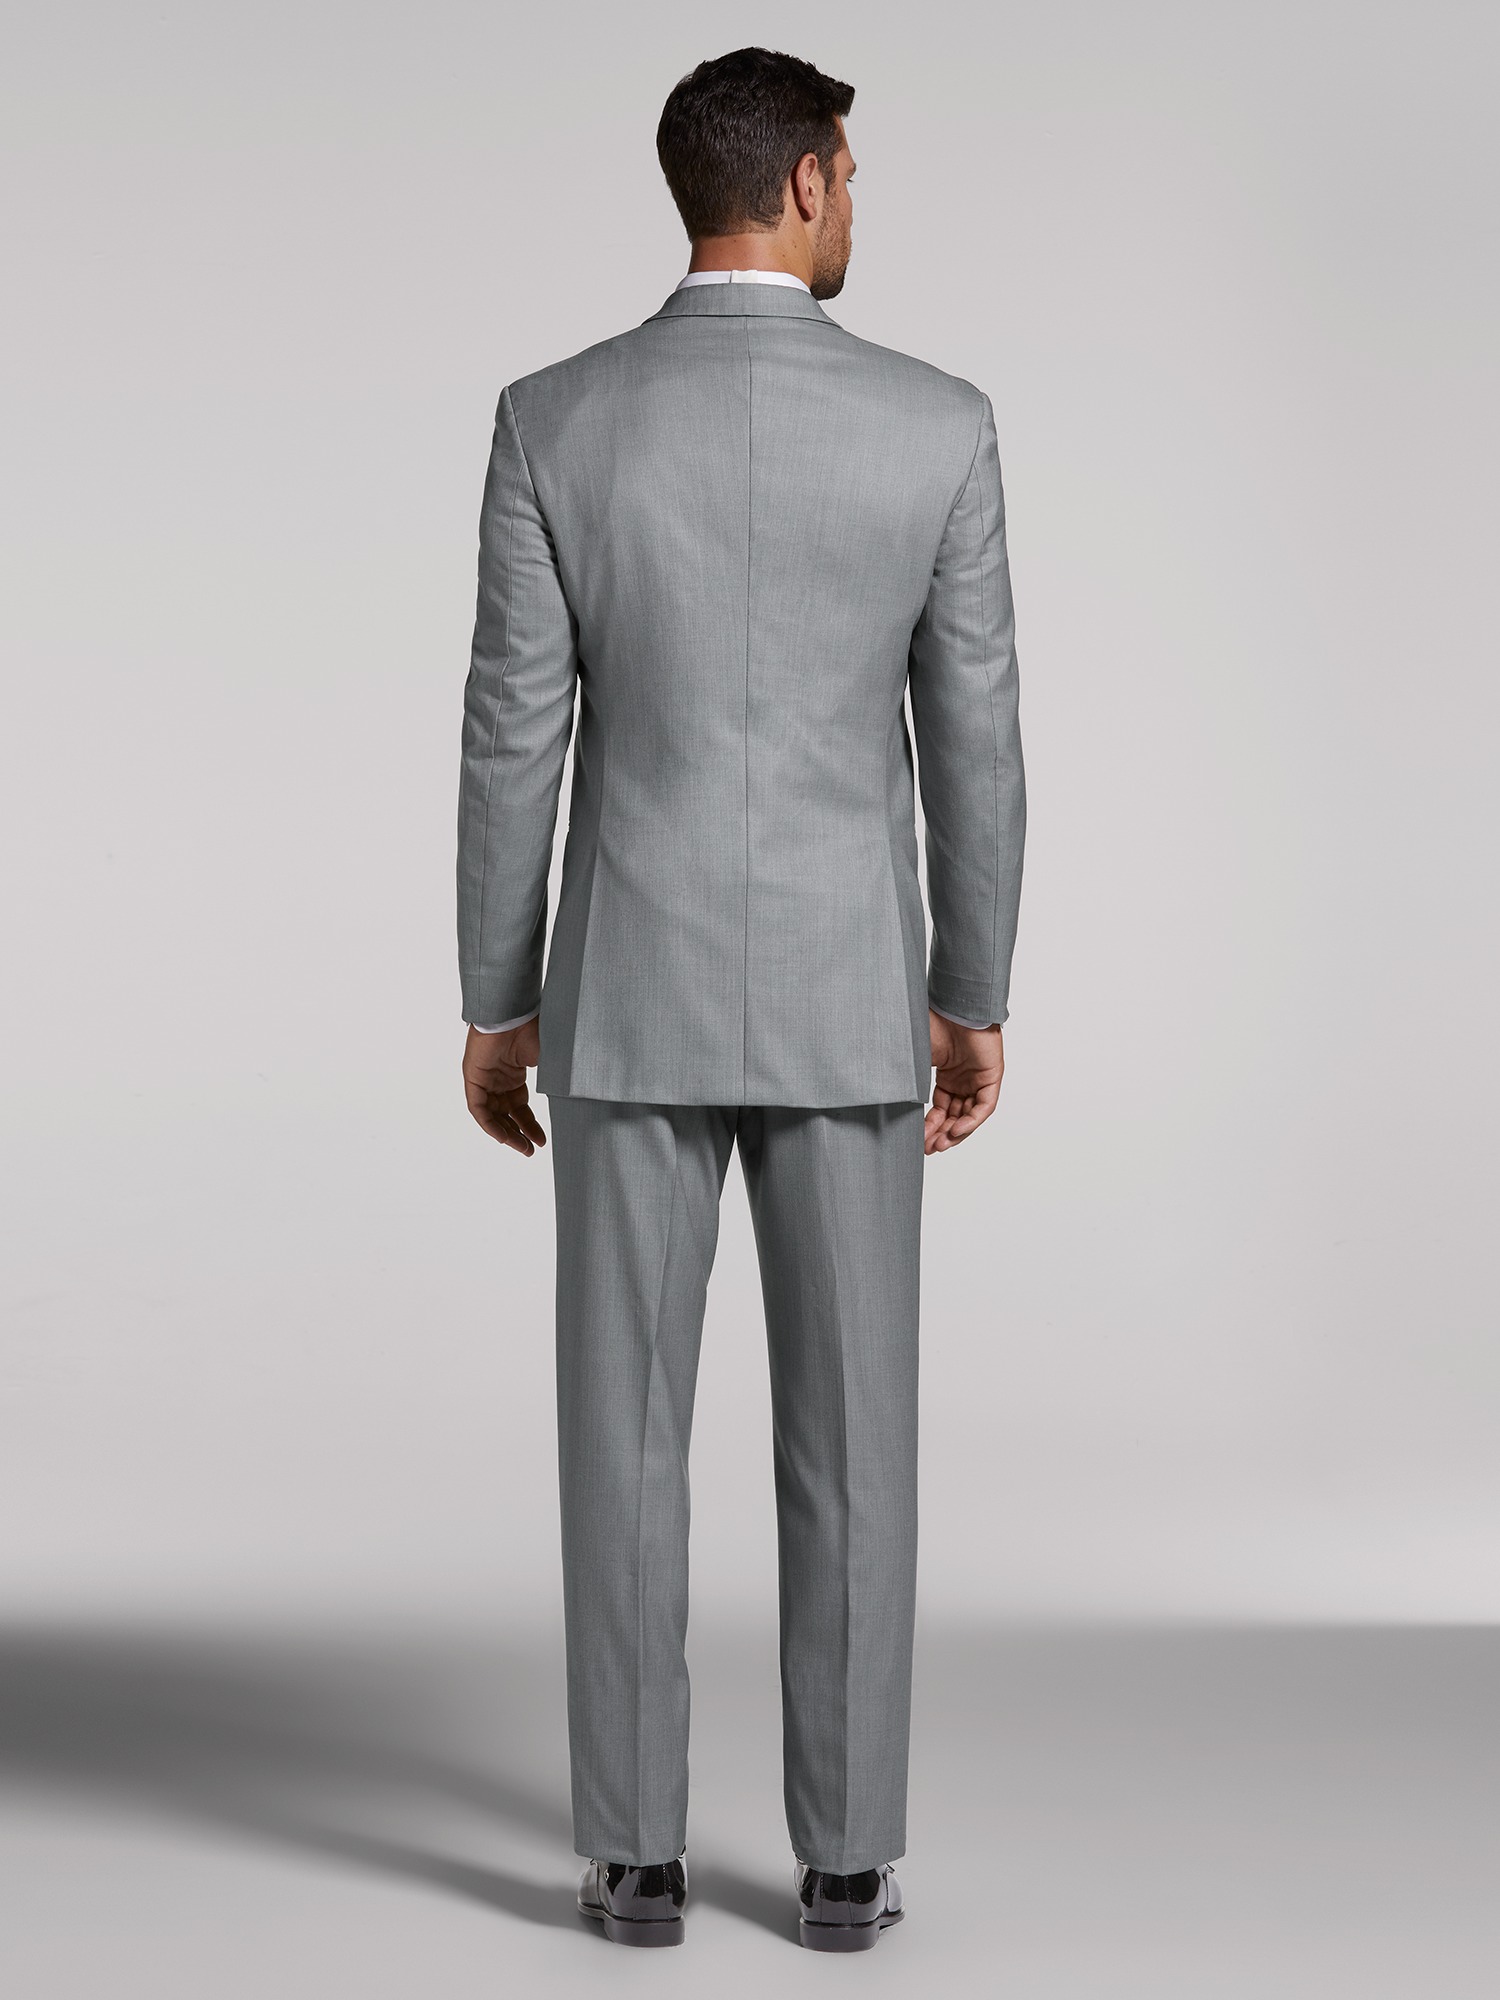 Vintage Men's Gray Suit by Pronto Uomo | Suit Rental